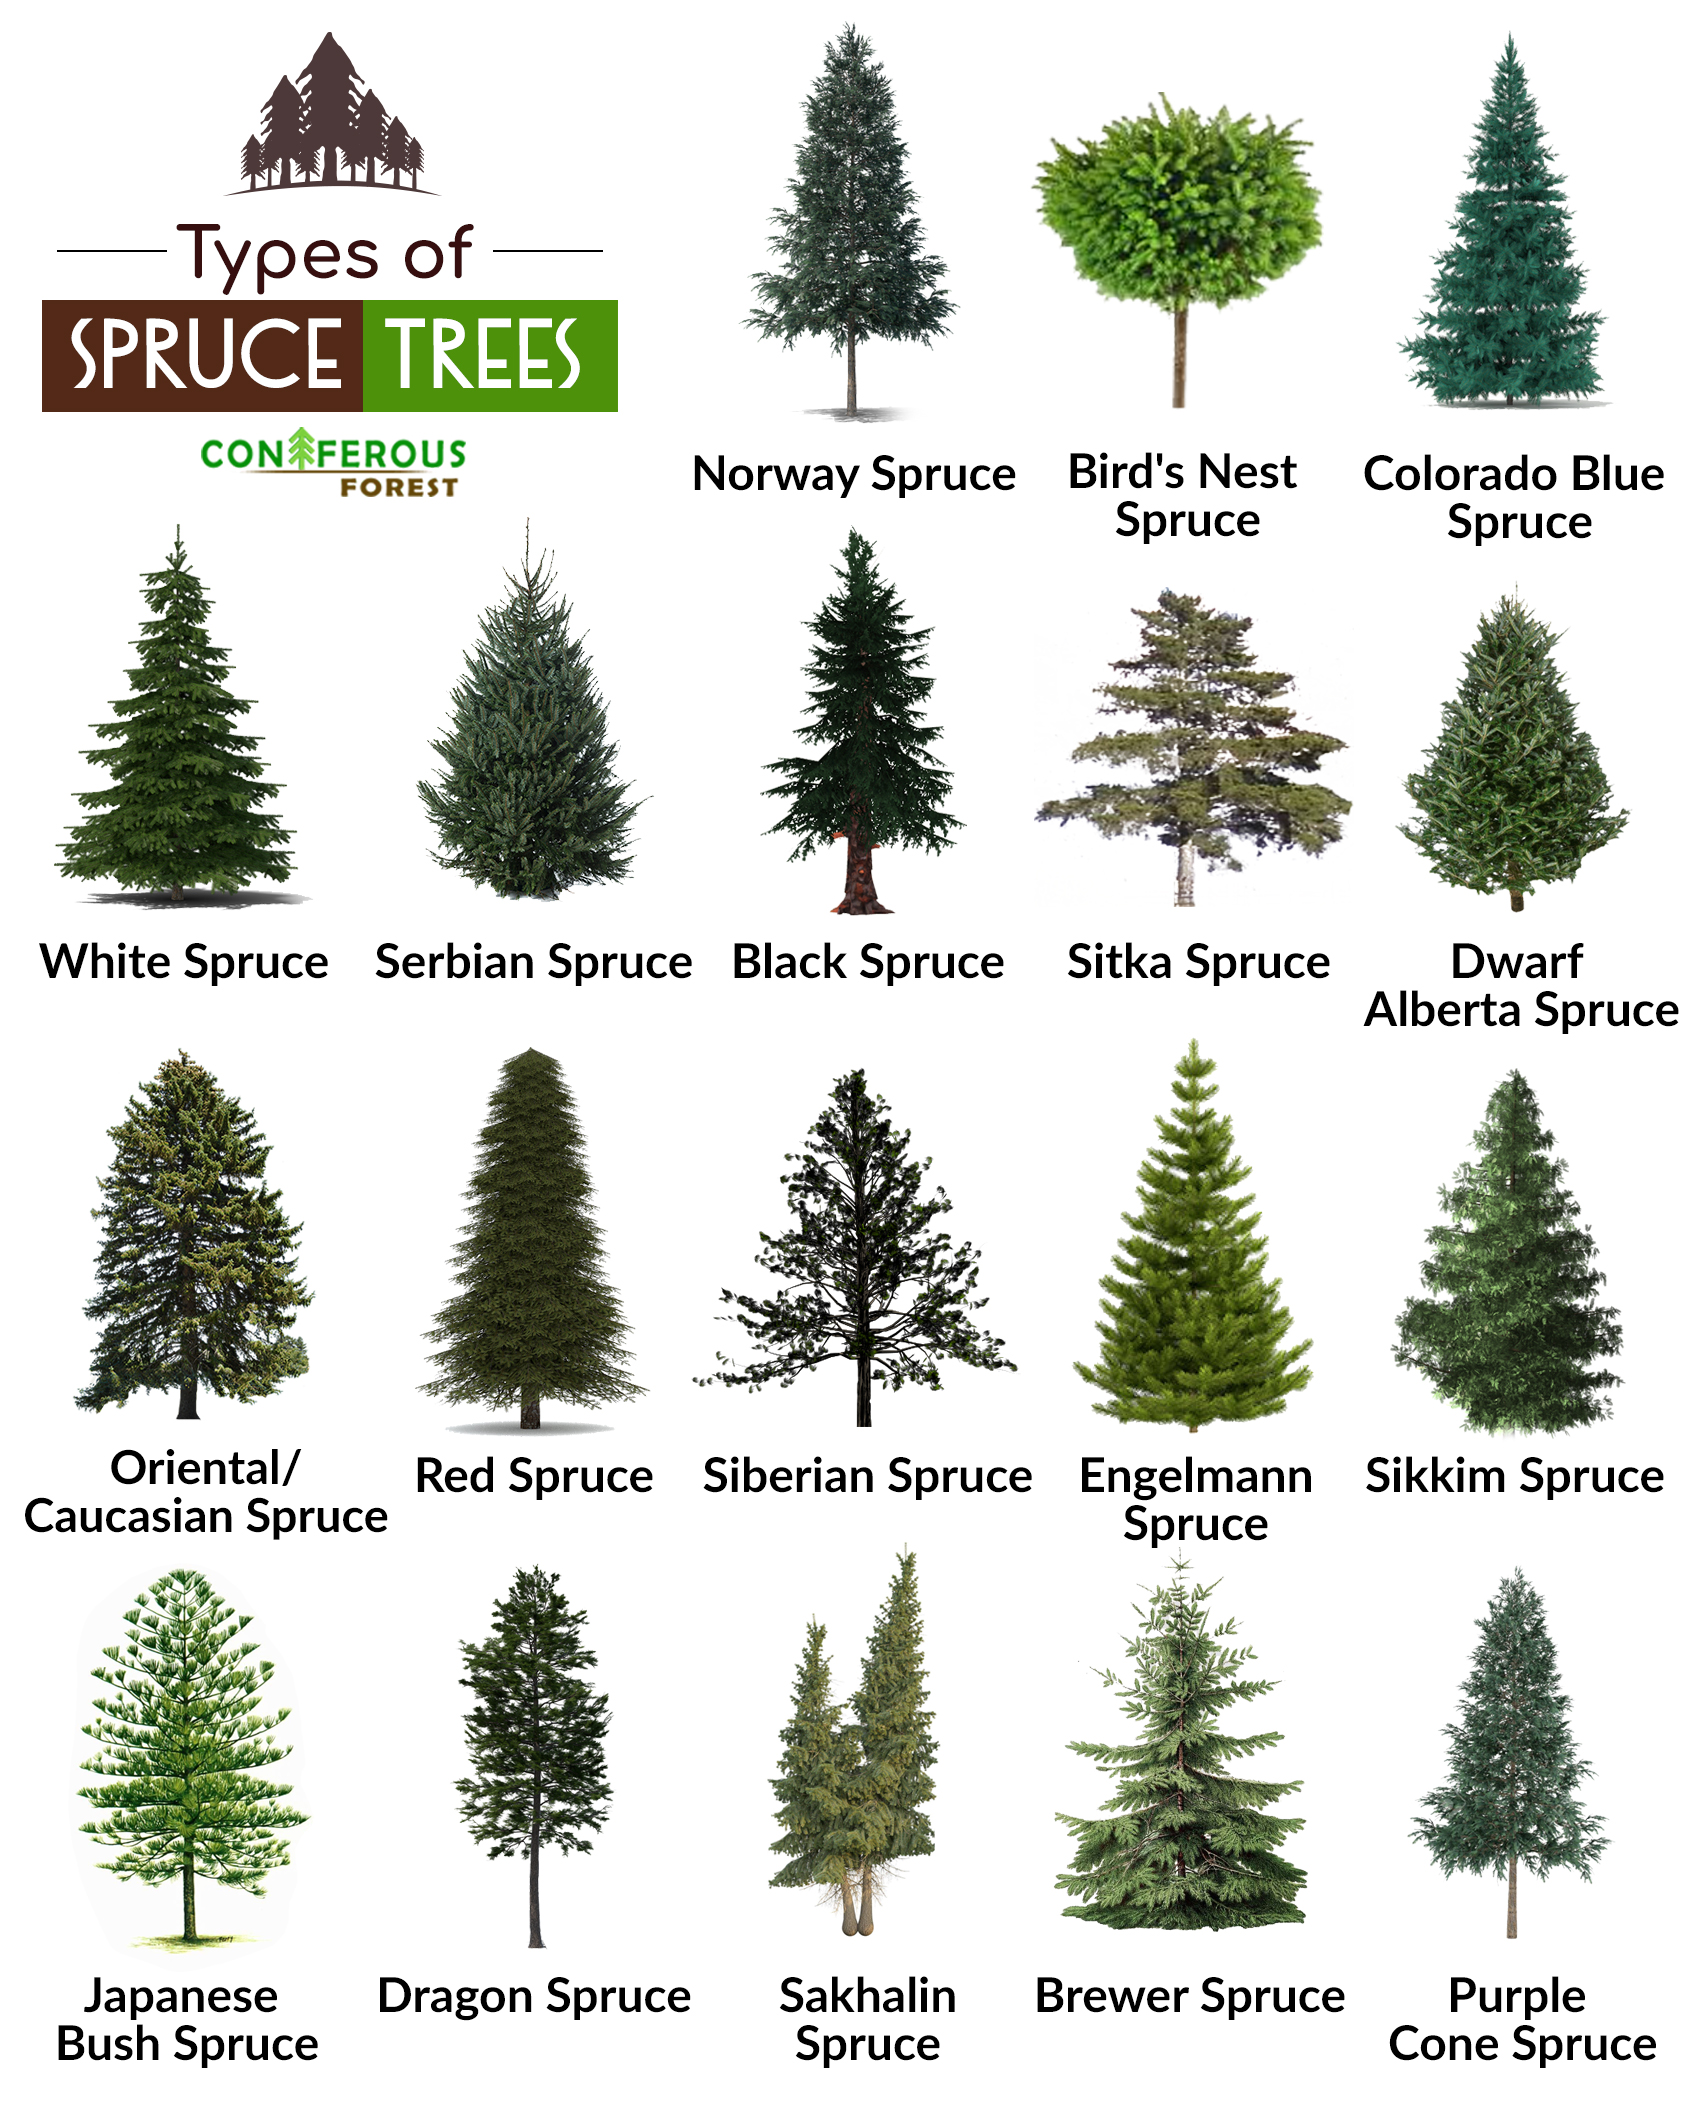 Is It Pine, Spruce, or Fir?